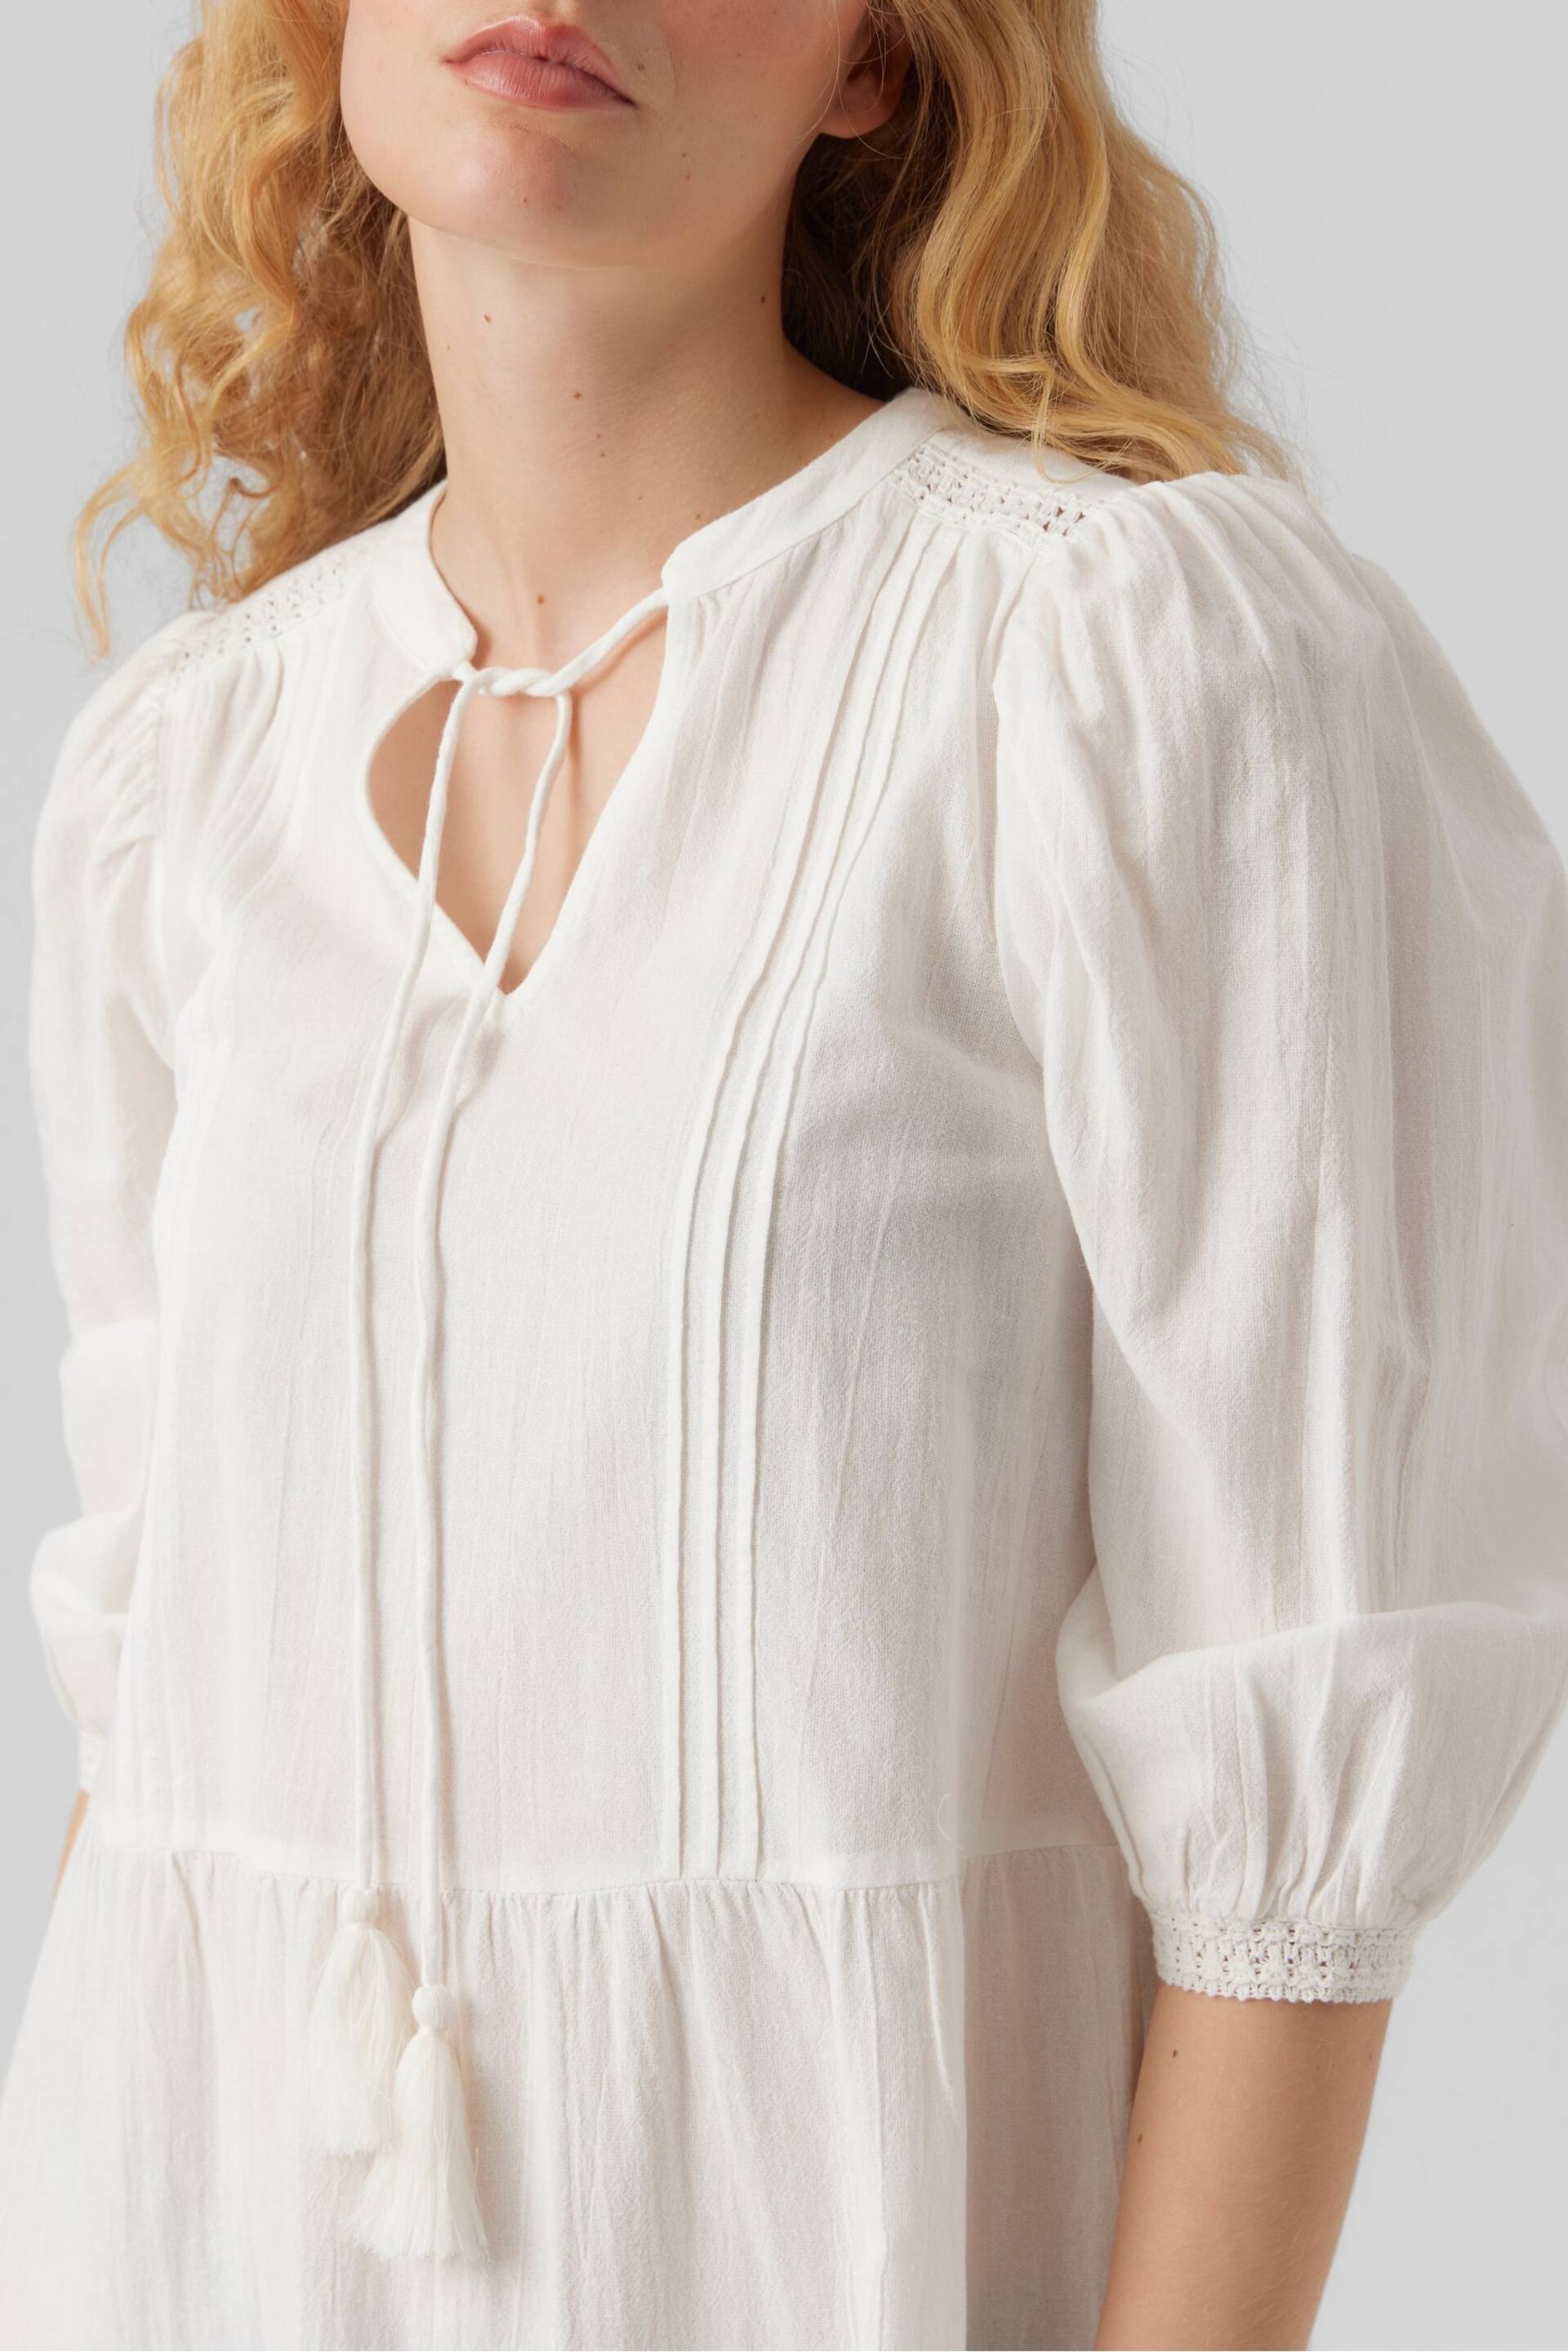 VERO MODA White Embroidered Detail Cotton Summer Boho Smock Dress - Image 4 of 5